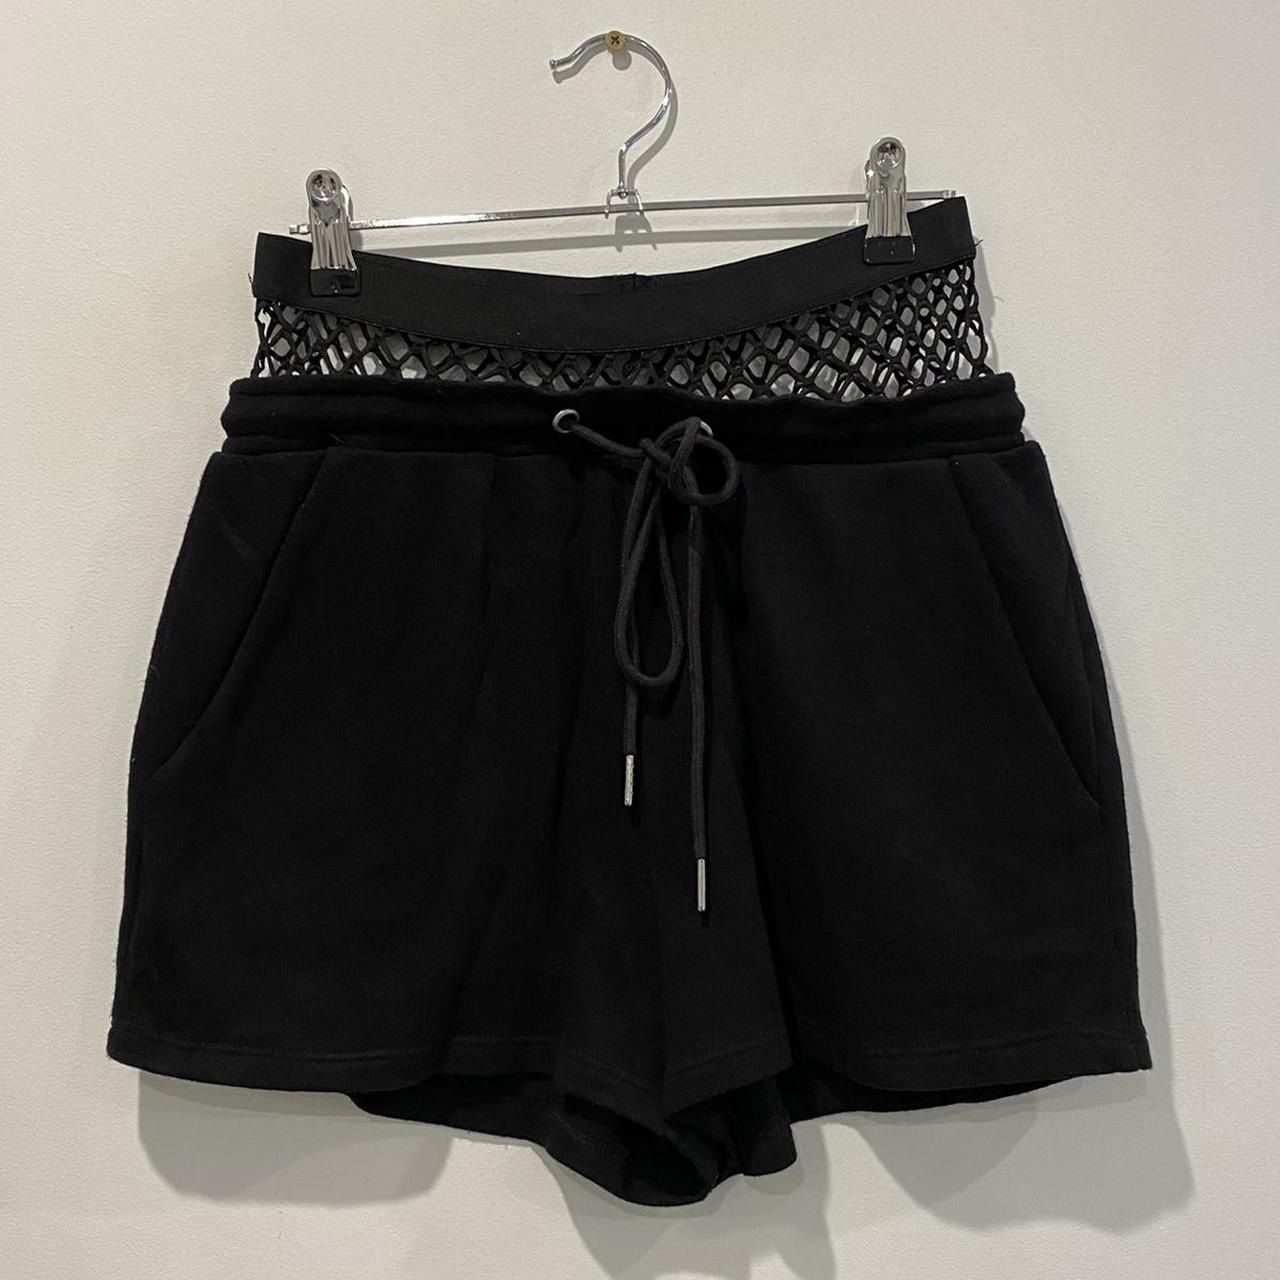 Black fishnet high waisted shorts - Depop